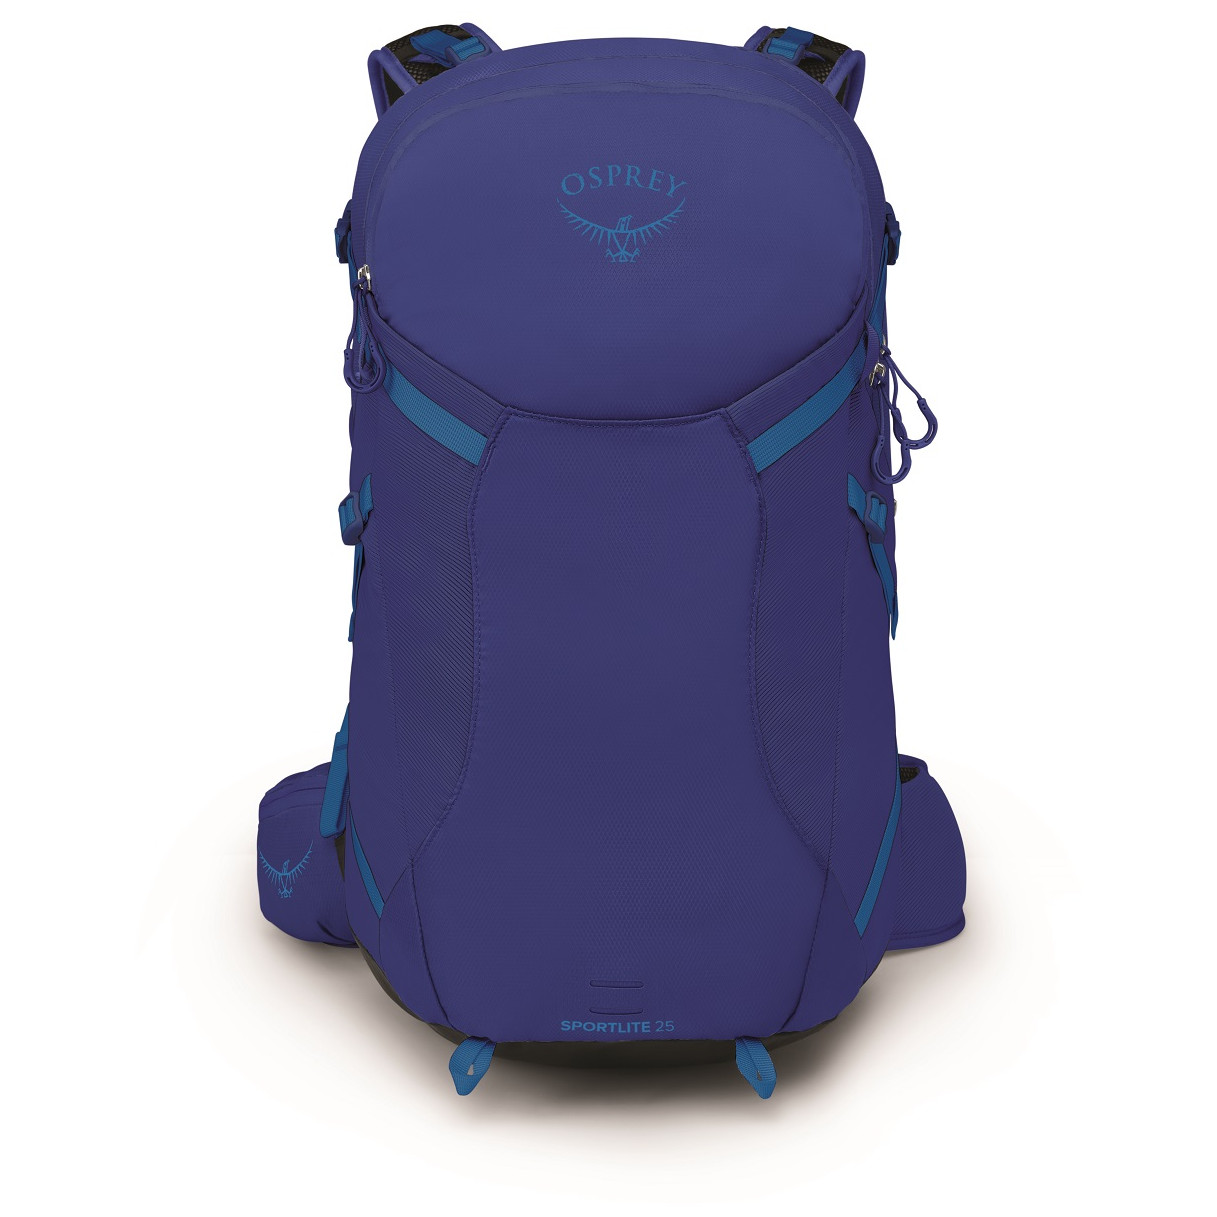 Turistický batoh Osprey Sportlite 25 Velikost zad batohu: S/M / Barva: modrá